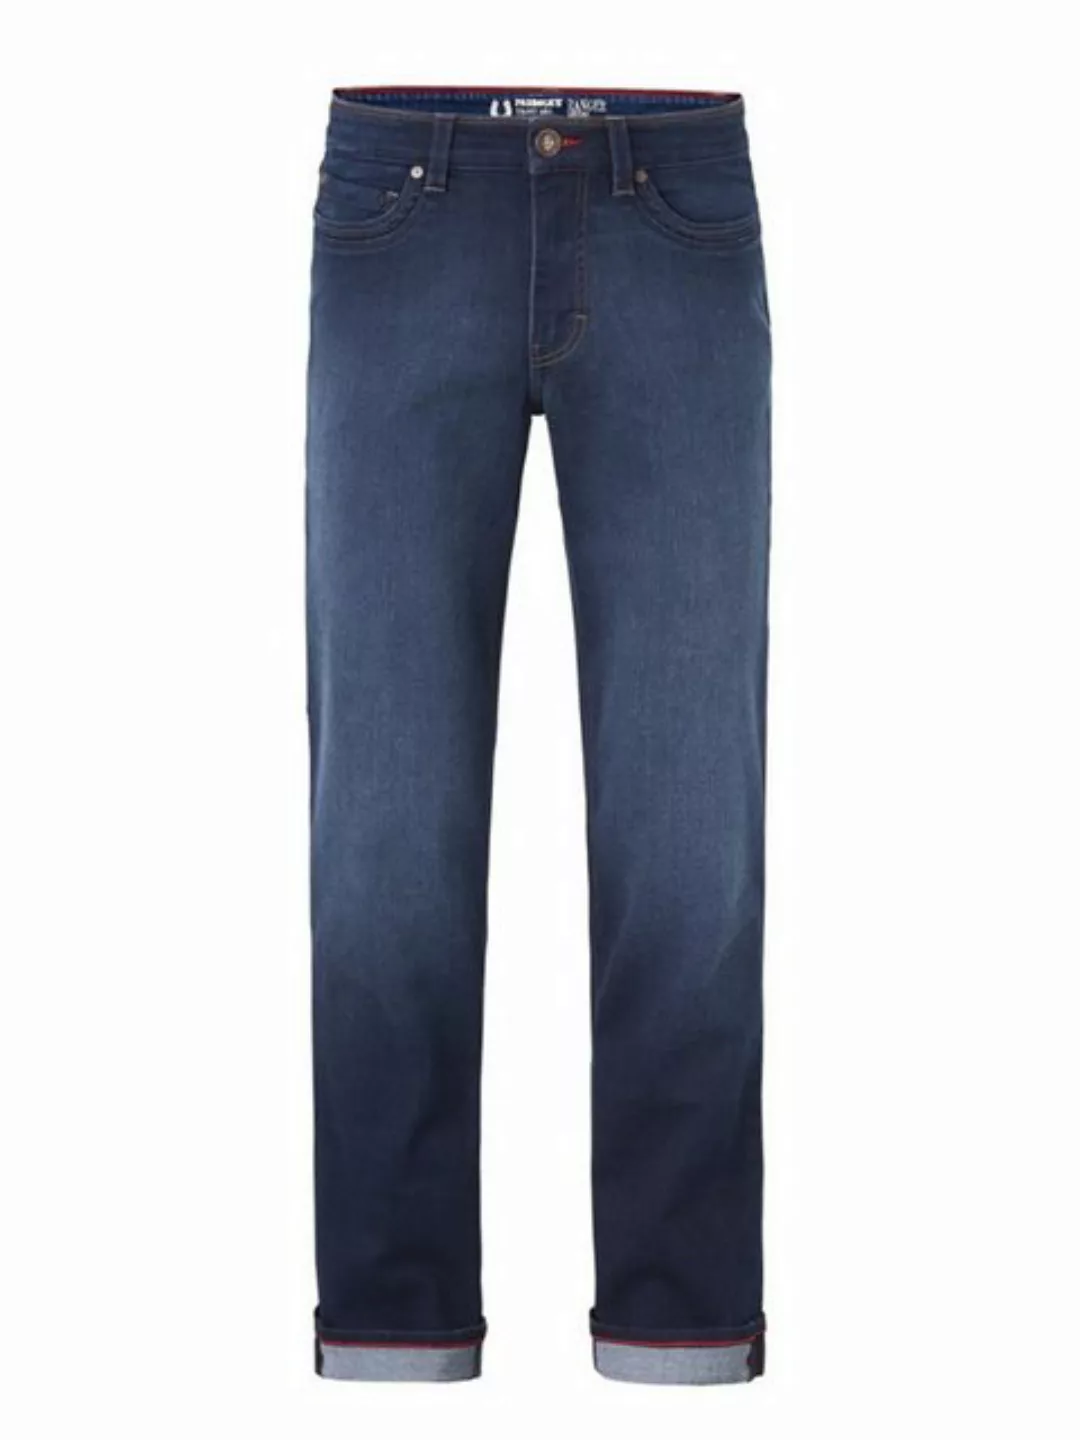 Paddock's 5-Pocket-Jeans PADDOCKS RANGER PIPE blue rinse use 80207 6333.531 günstig online kaufen